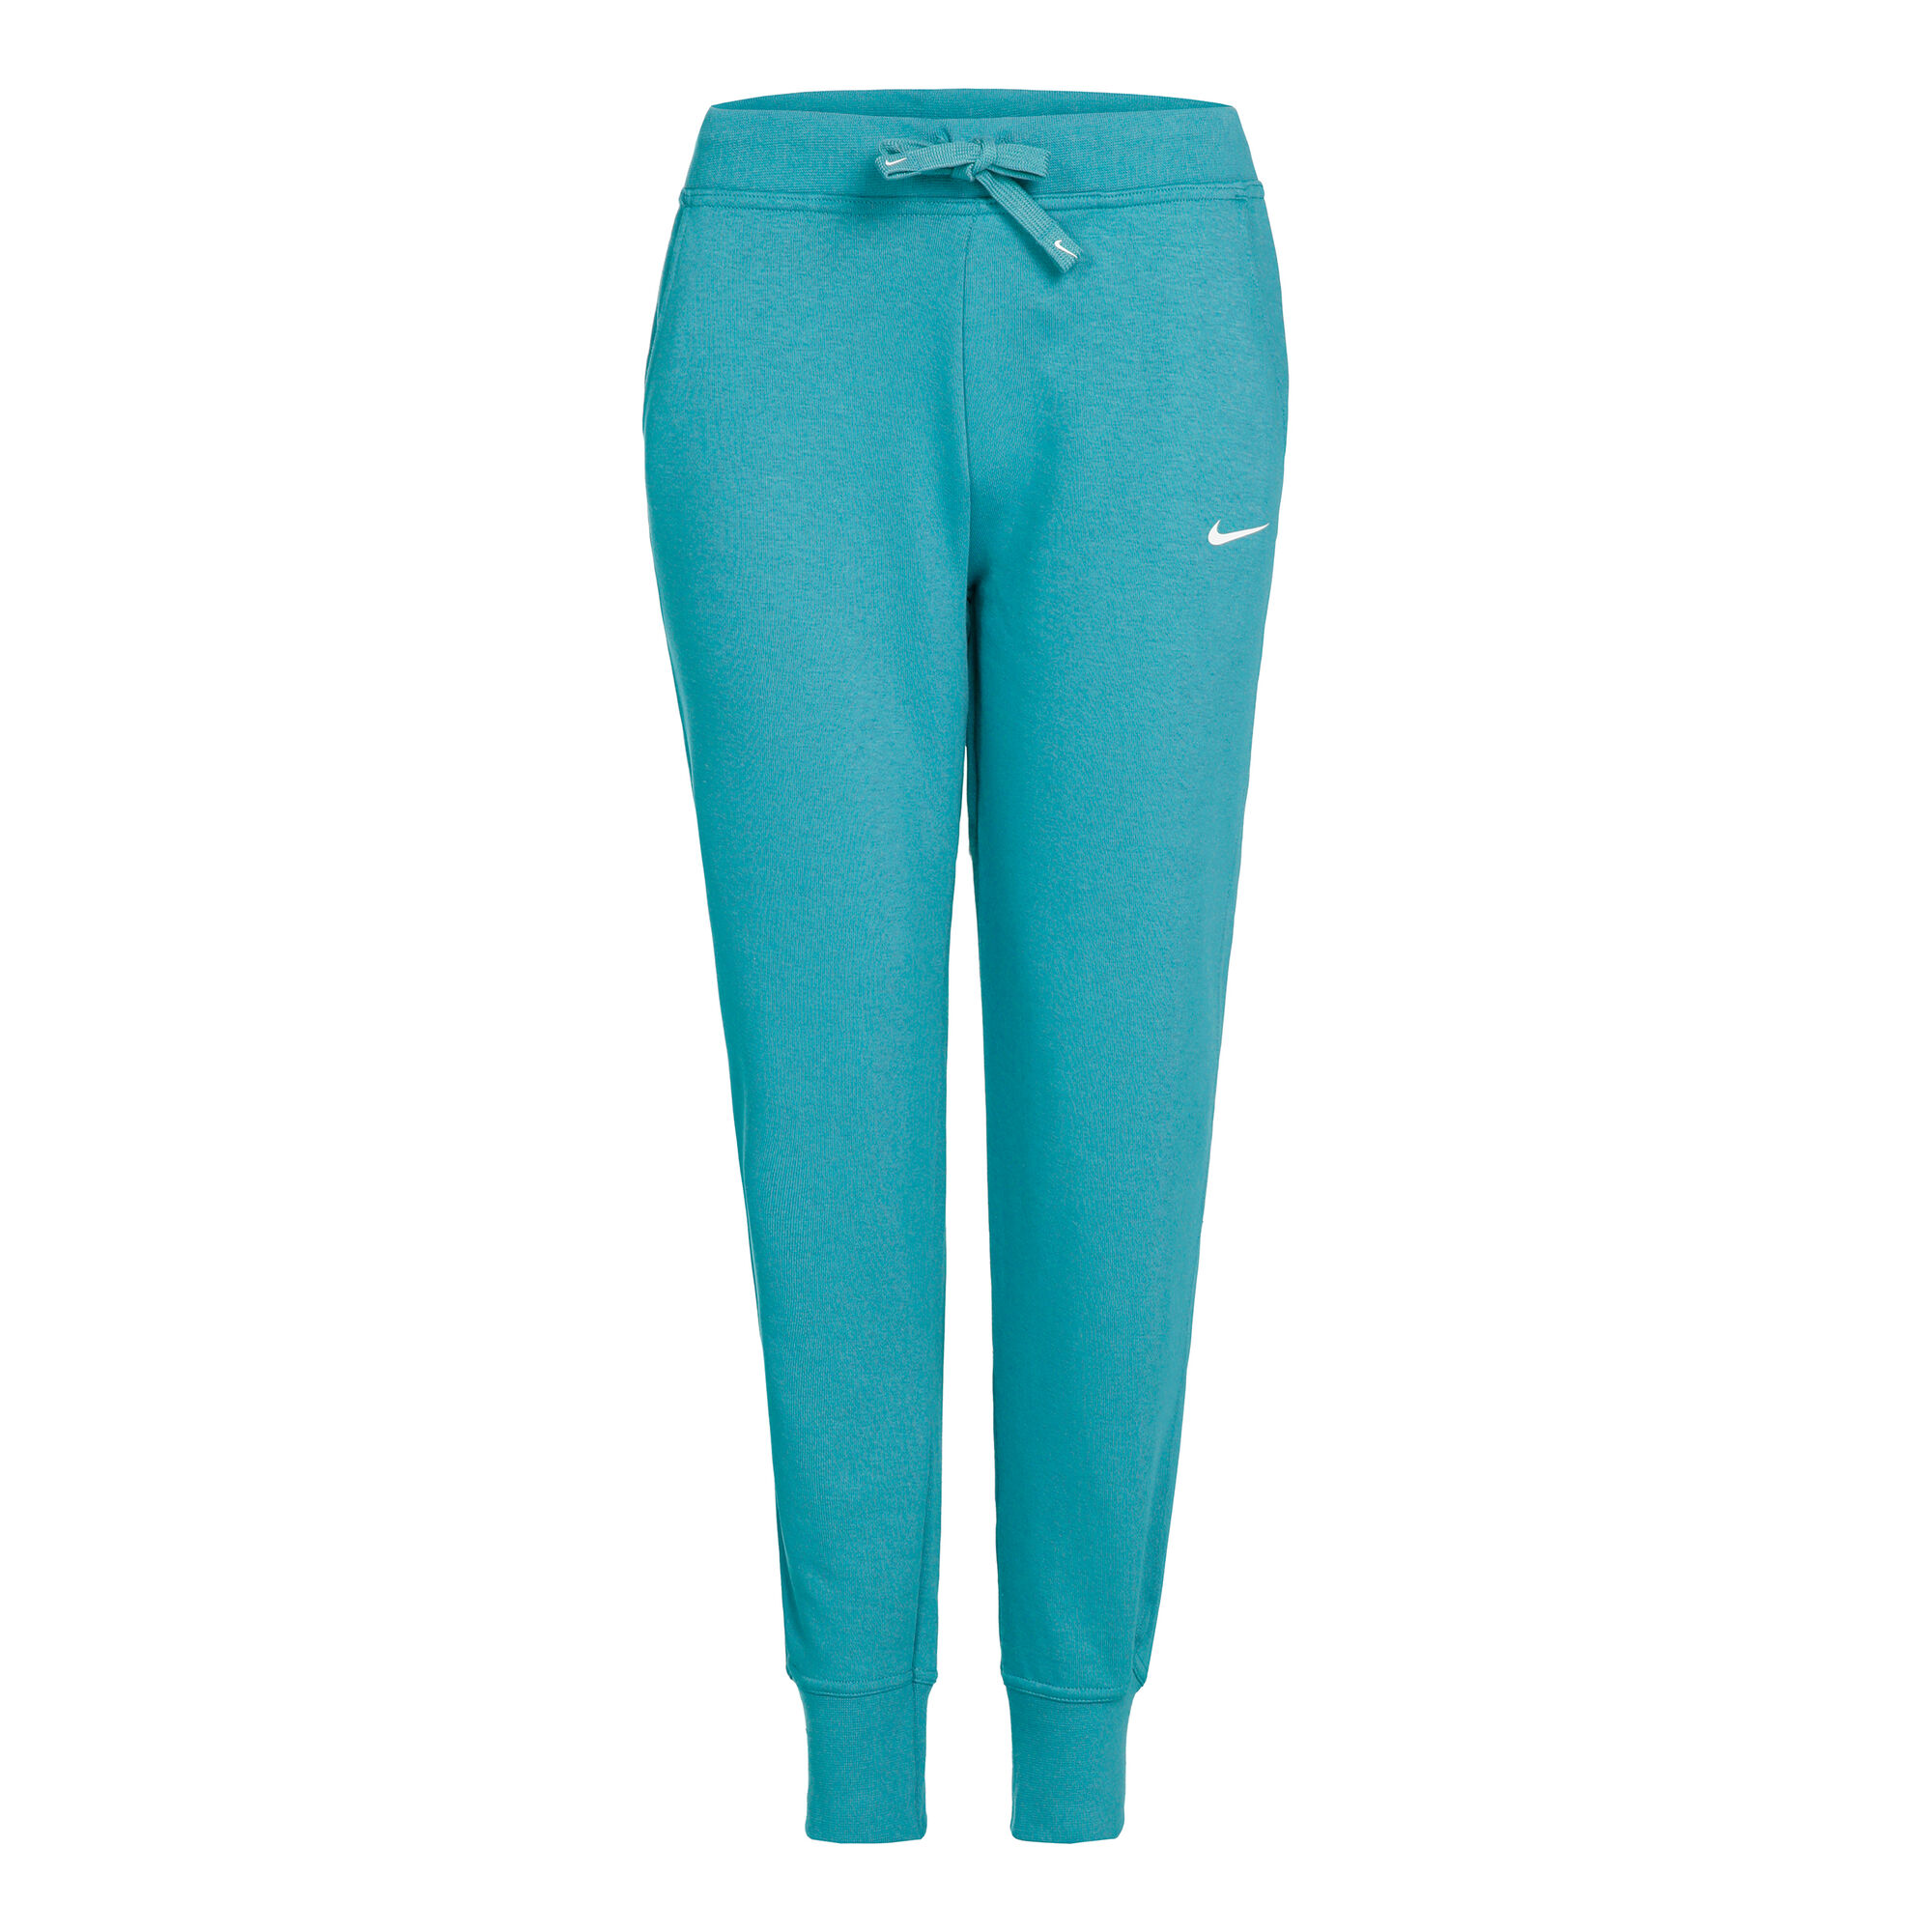 Buy Nike Dri-Fit Get Fit Printed Training Pants Women Blue online